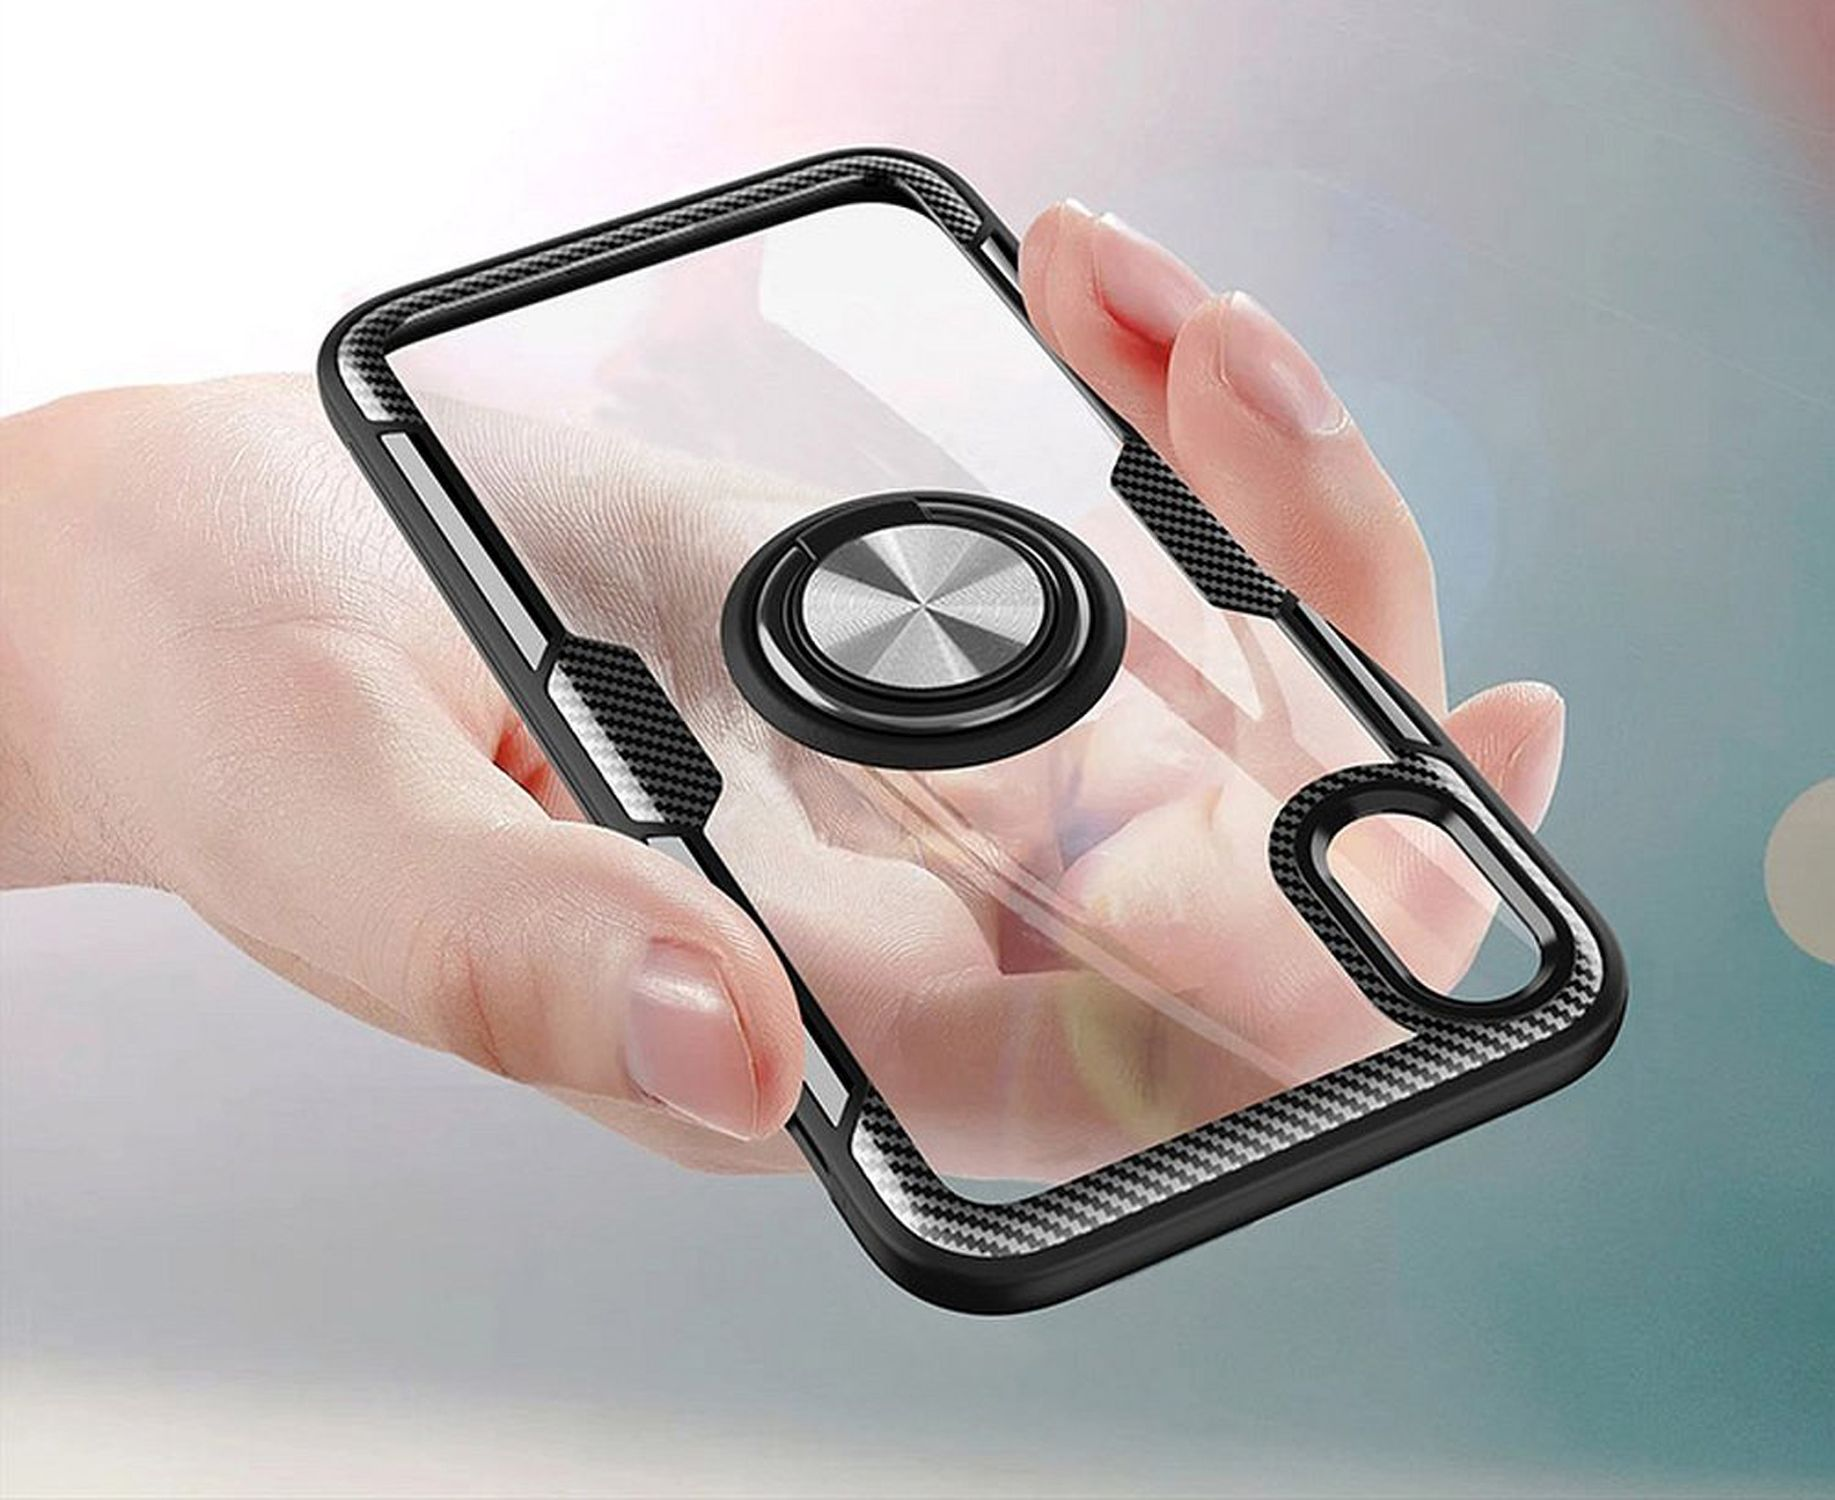 Bumper, COFI 9, Redmi Transparent Case, Ring Xiaomi, Carbon